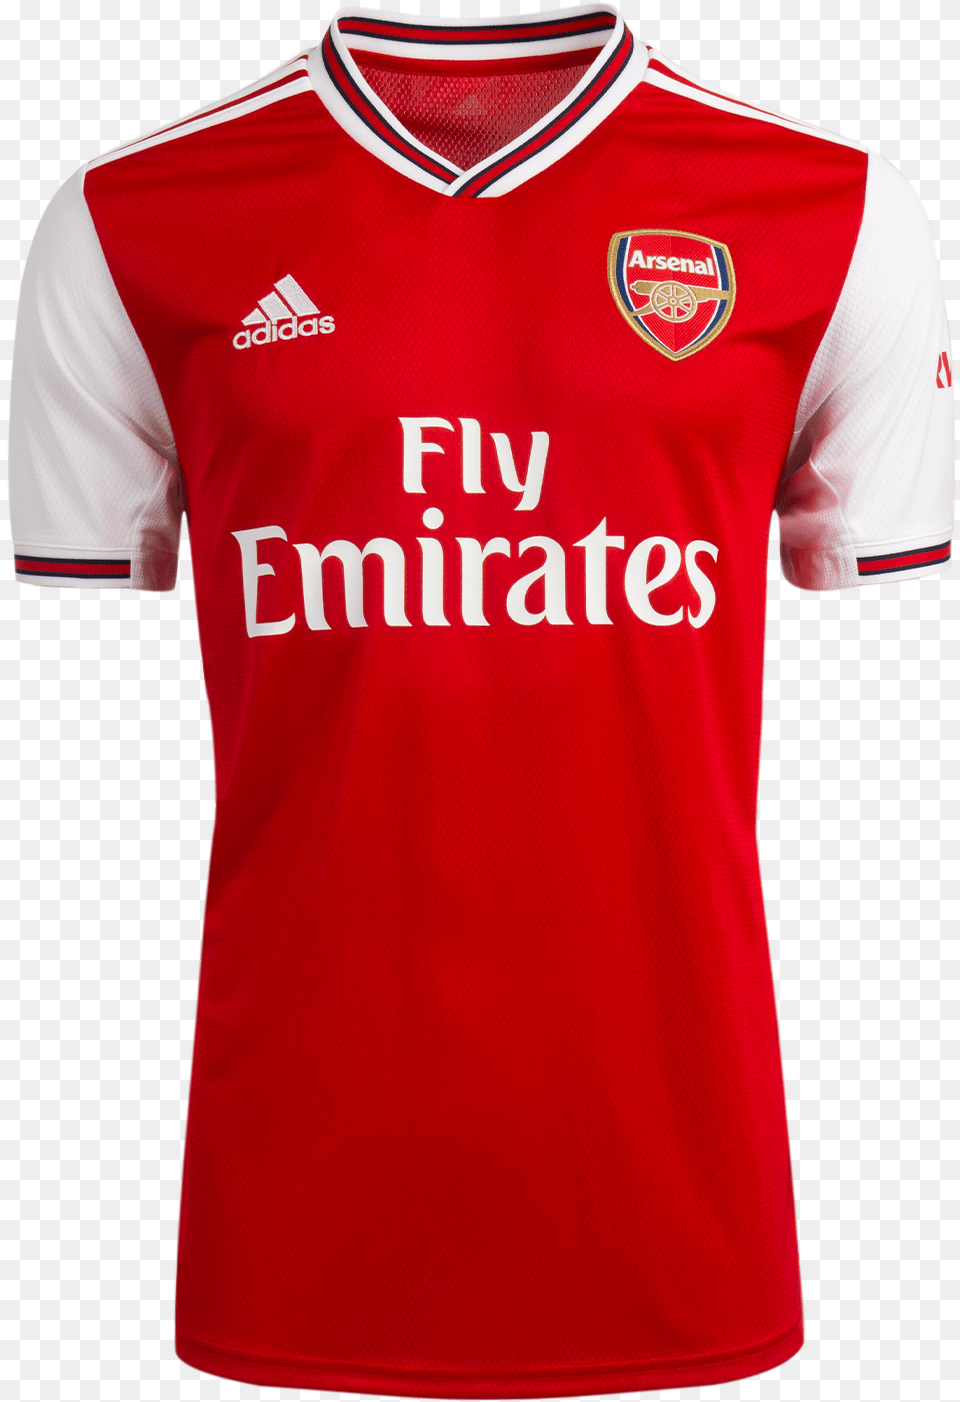 Arsenal Home Jersey Ez Football Hong Kong Shirt, Clothing, T-shirt Png